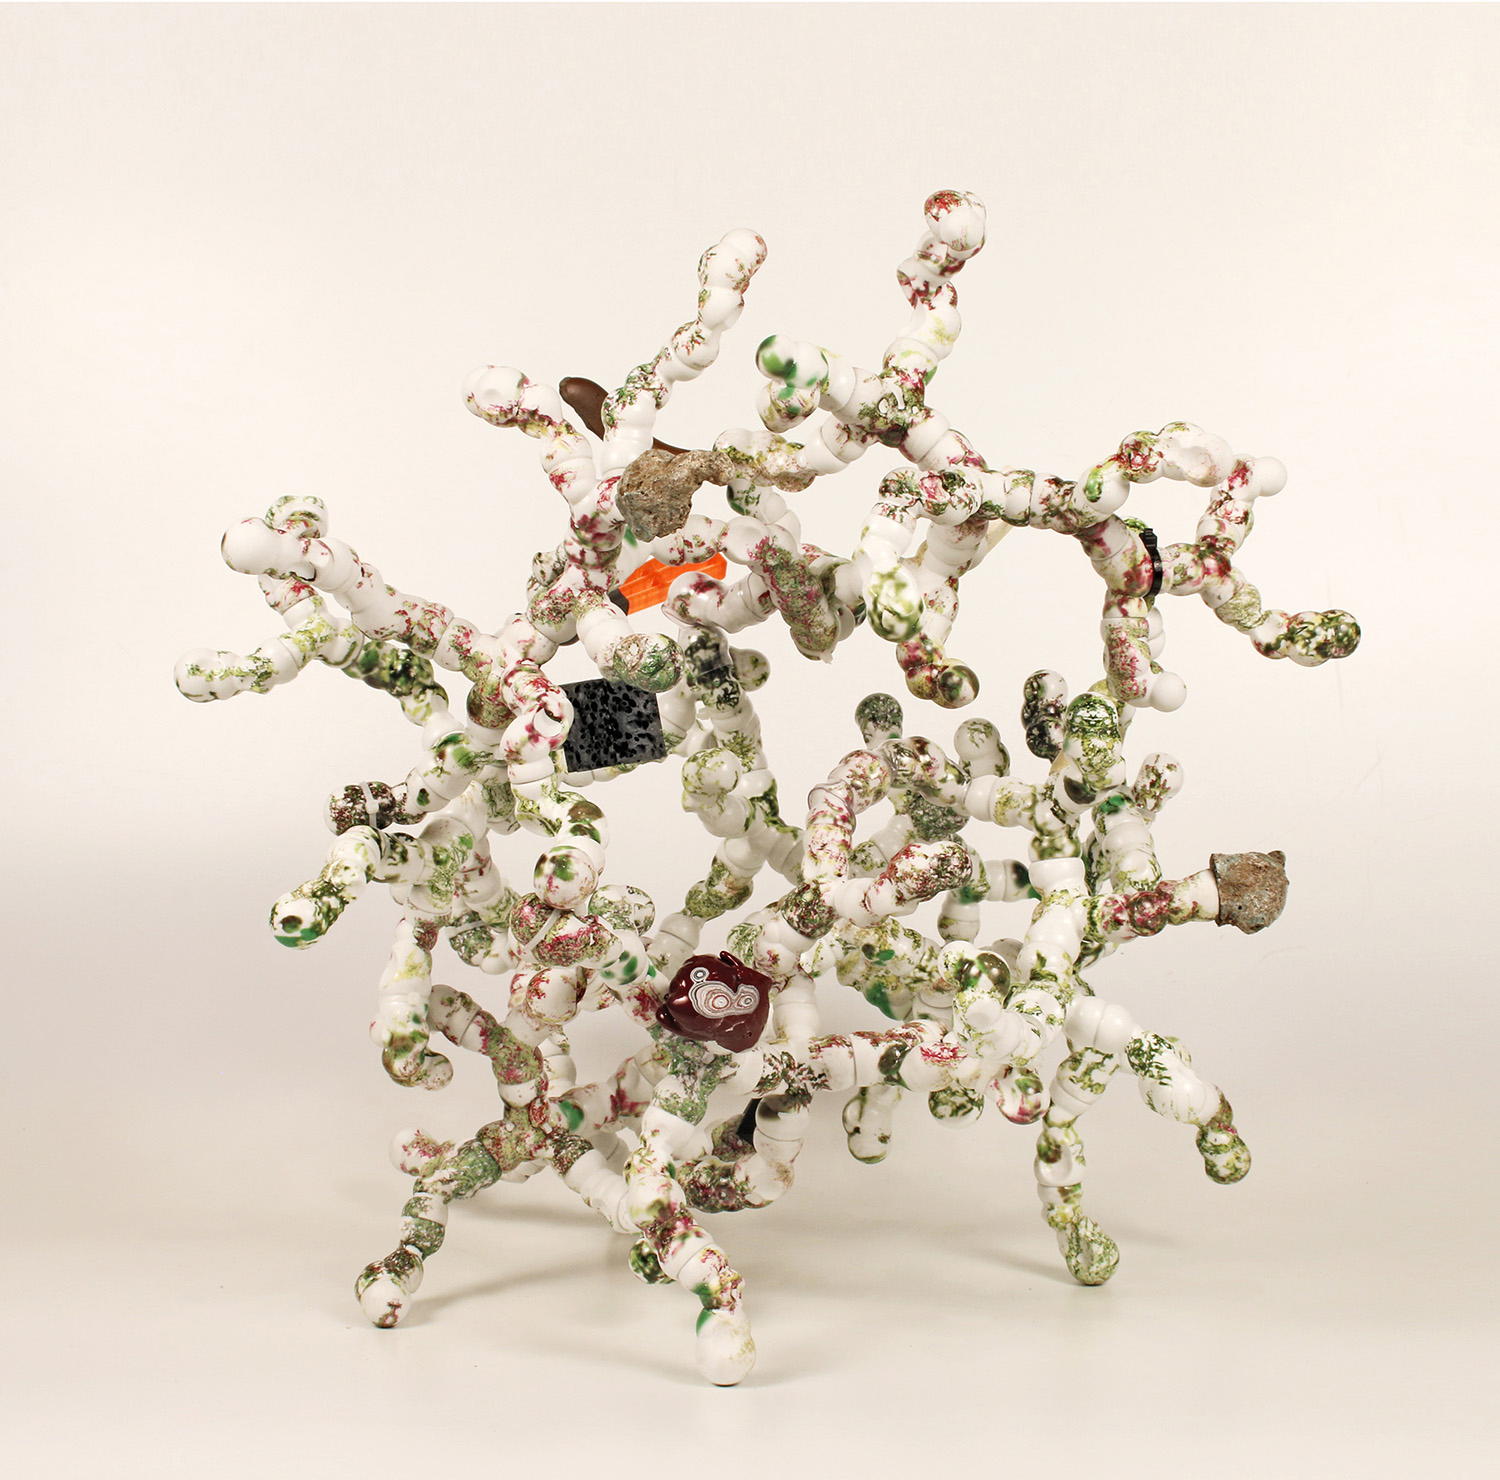 Thomas Schmidt, Future Flora, cast Porcelain, ceramic decals, pottery shards, 3D printed PLA, mixed media, 48 x 40 x 46 cm, 2019